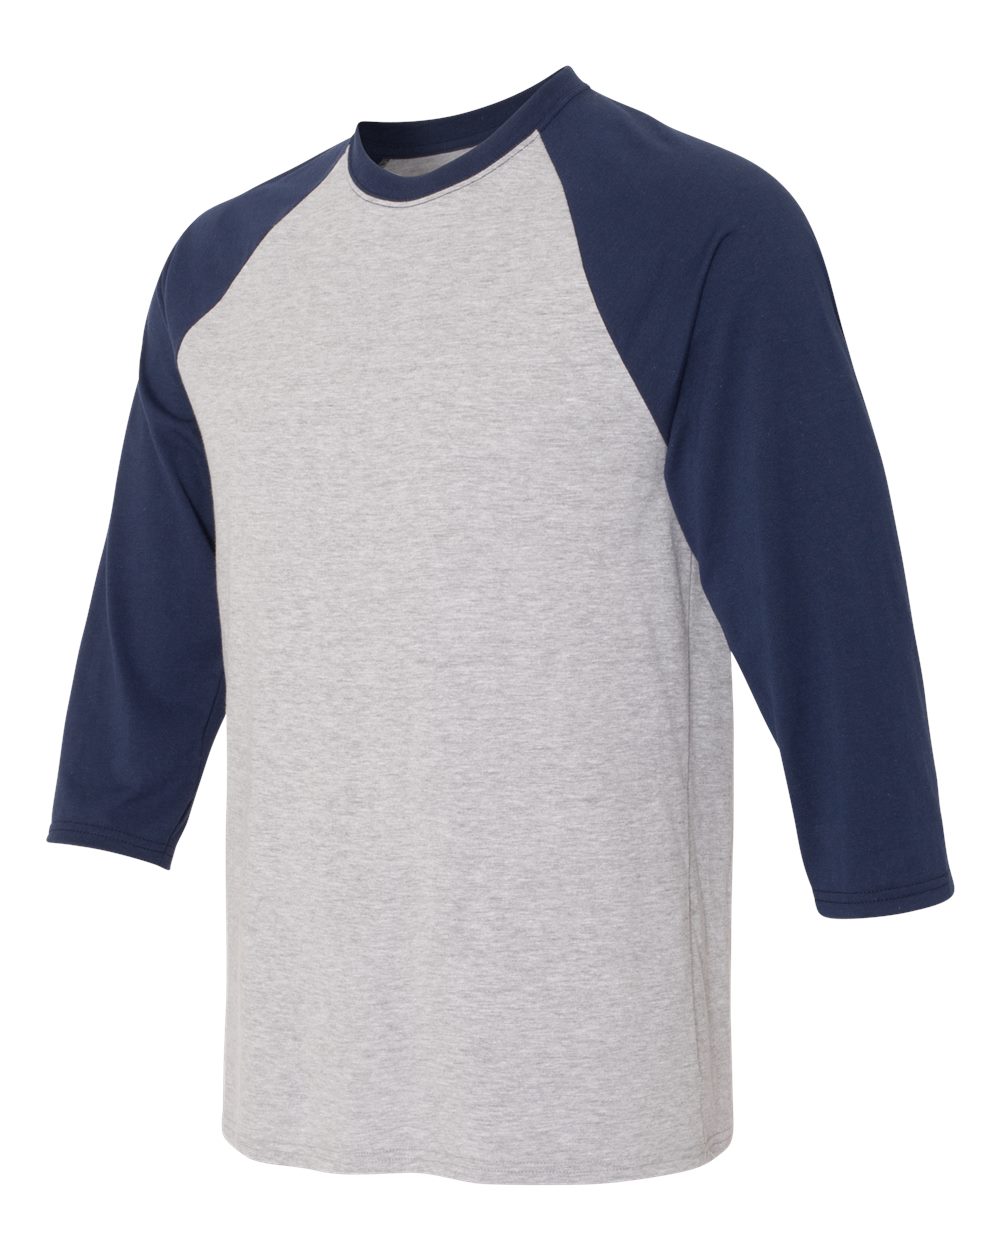 Hanes 42BA - X-Temp Three-Quarter Sleeve Baseball T-Shirt